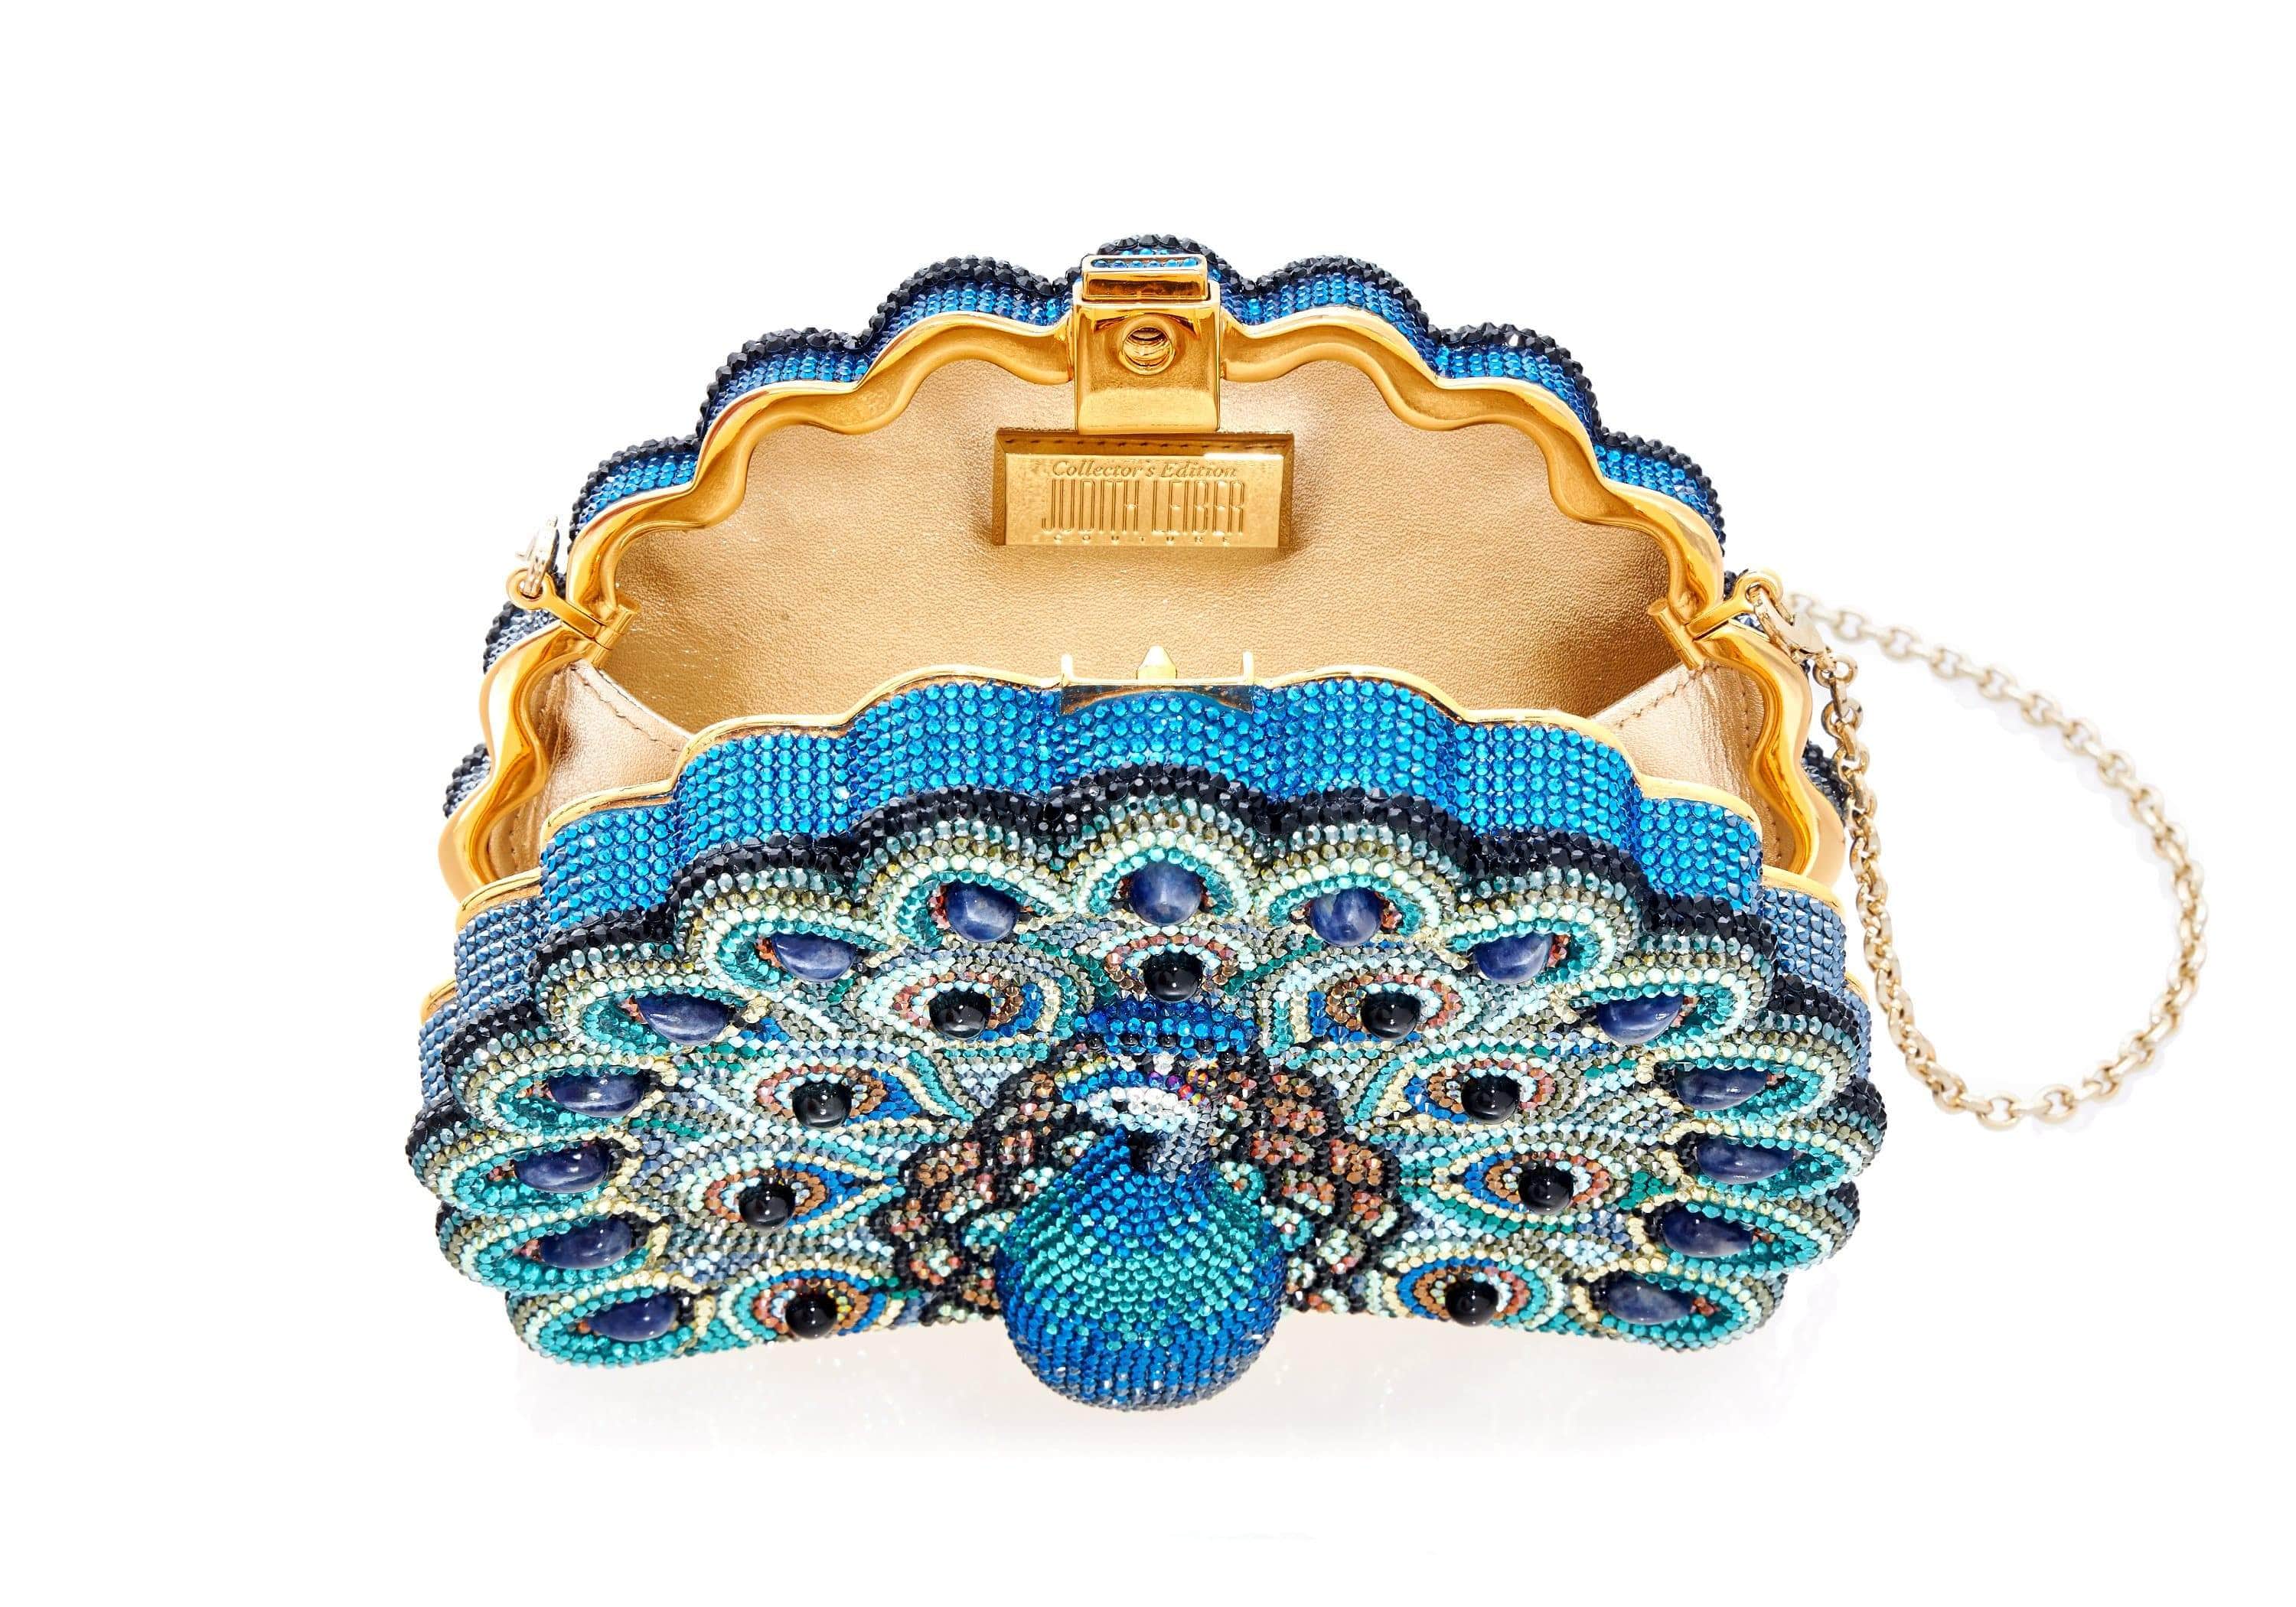 JUDITH LEIBER HEDGEHOG Multi Gem Swarovski Crystal Minaudiere Handbag Clutch  $4,819.99 - PicClick